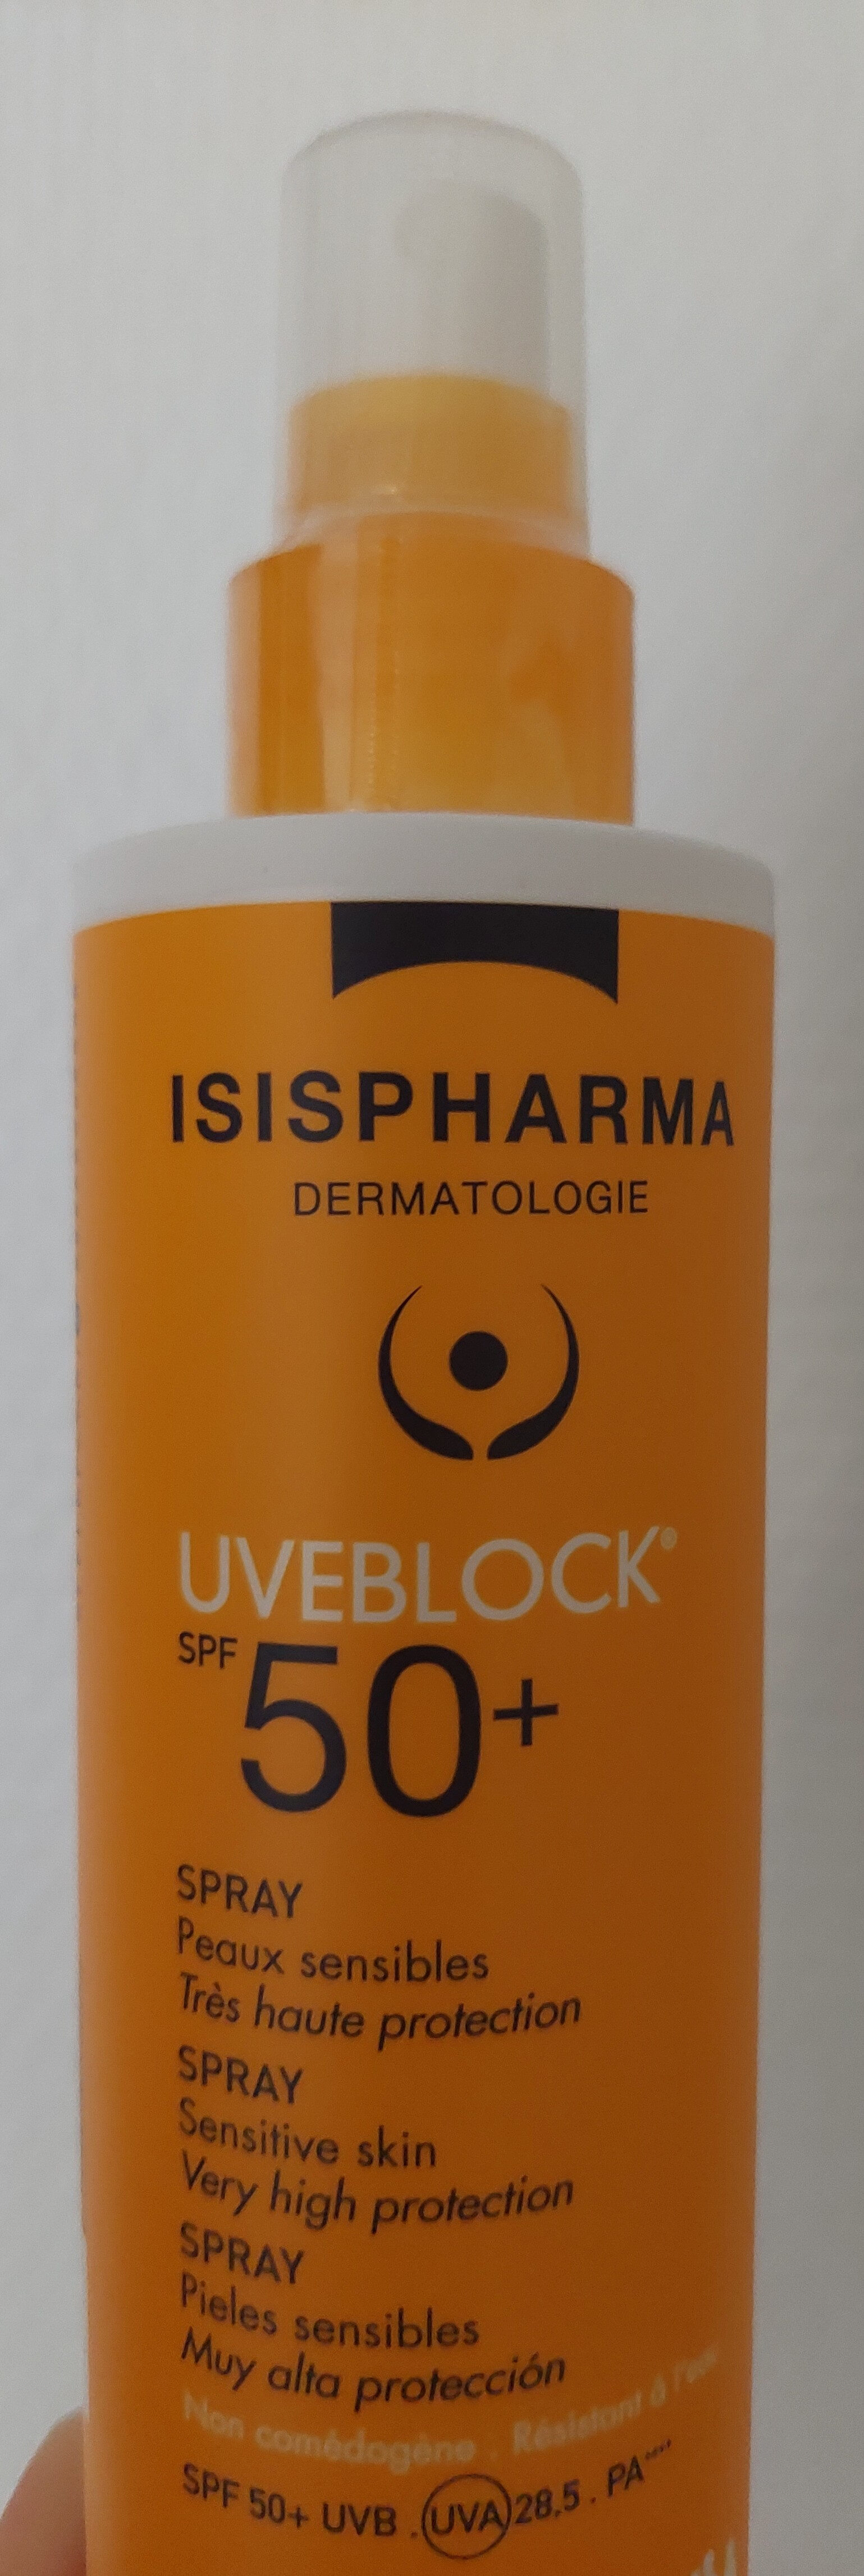 Isispharma uveblock 50+ - Product - fr